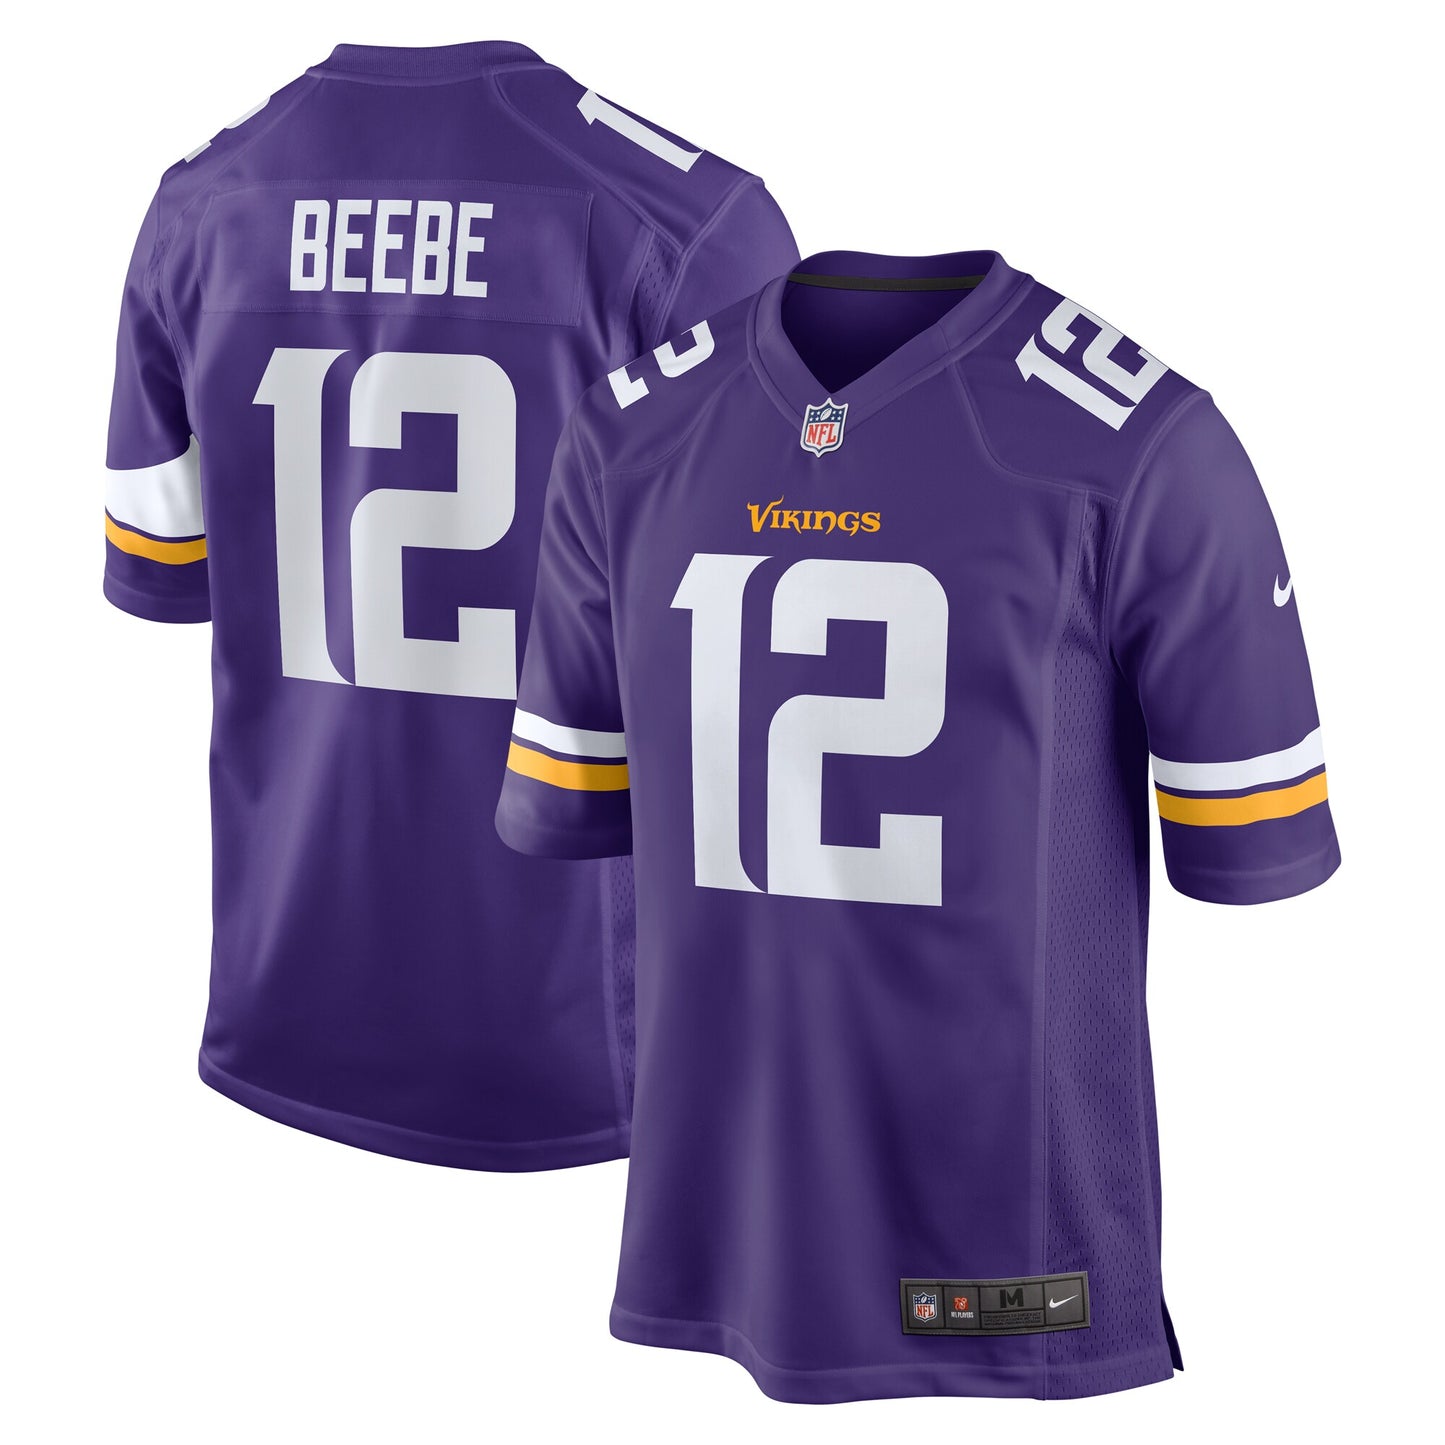 Chad Beebe Minnesota Vikings Nike Game Jersey - Purple